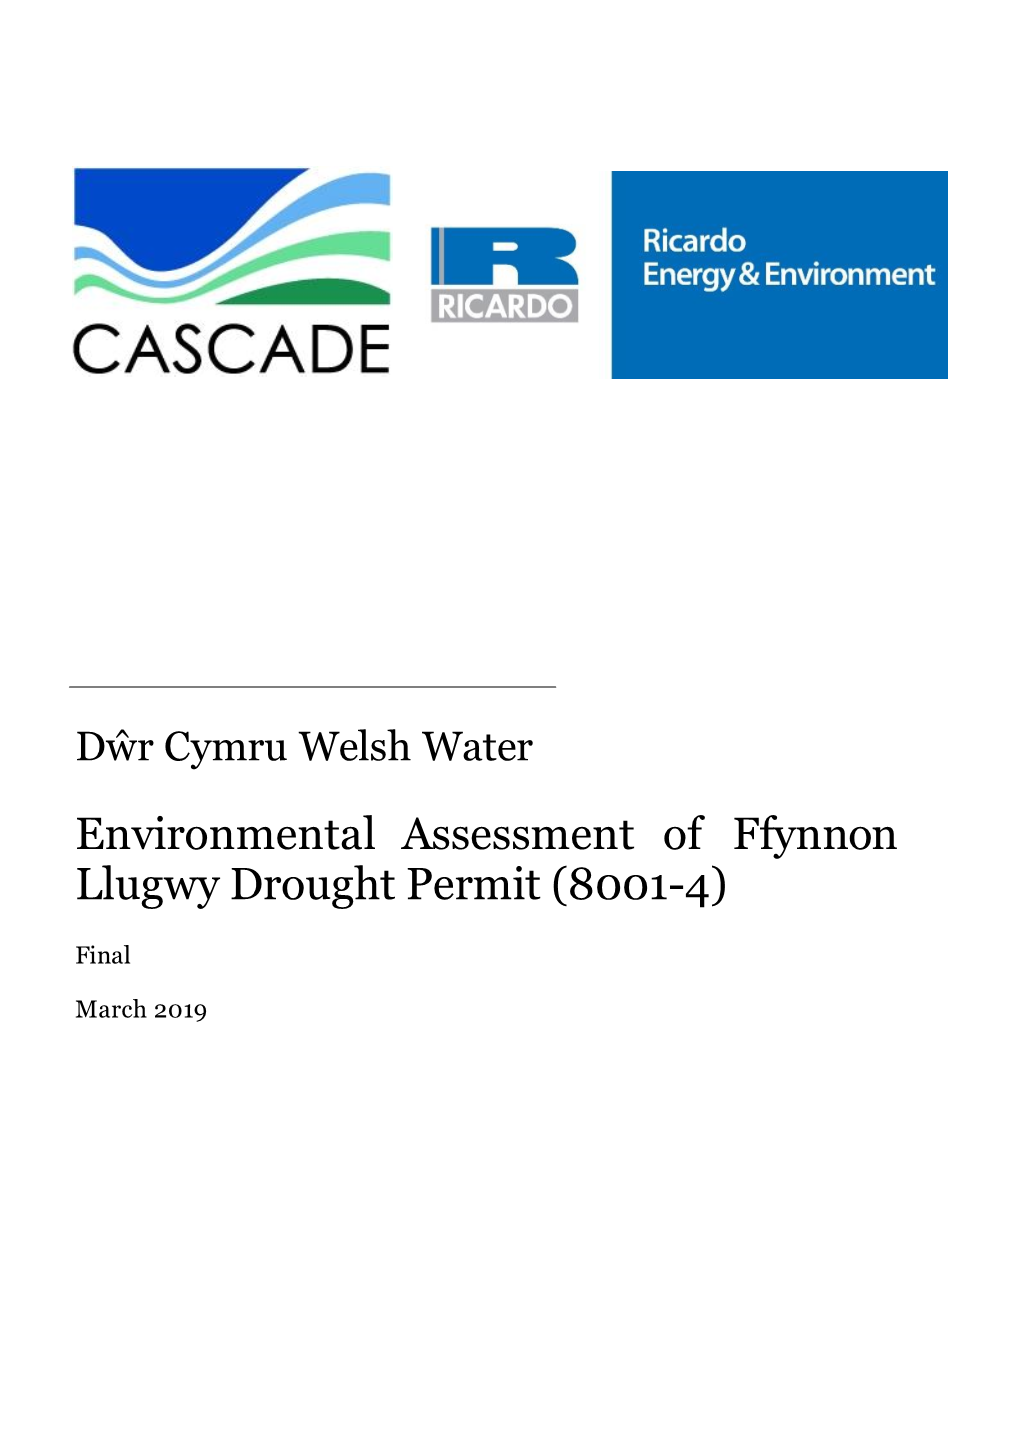 Environmental Assessment of Ffynnon Llugwy Drought Permit (8001-4)